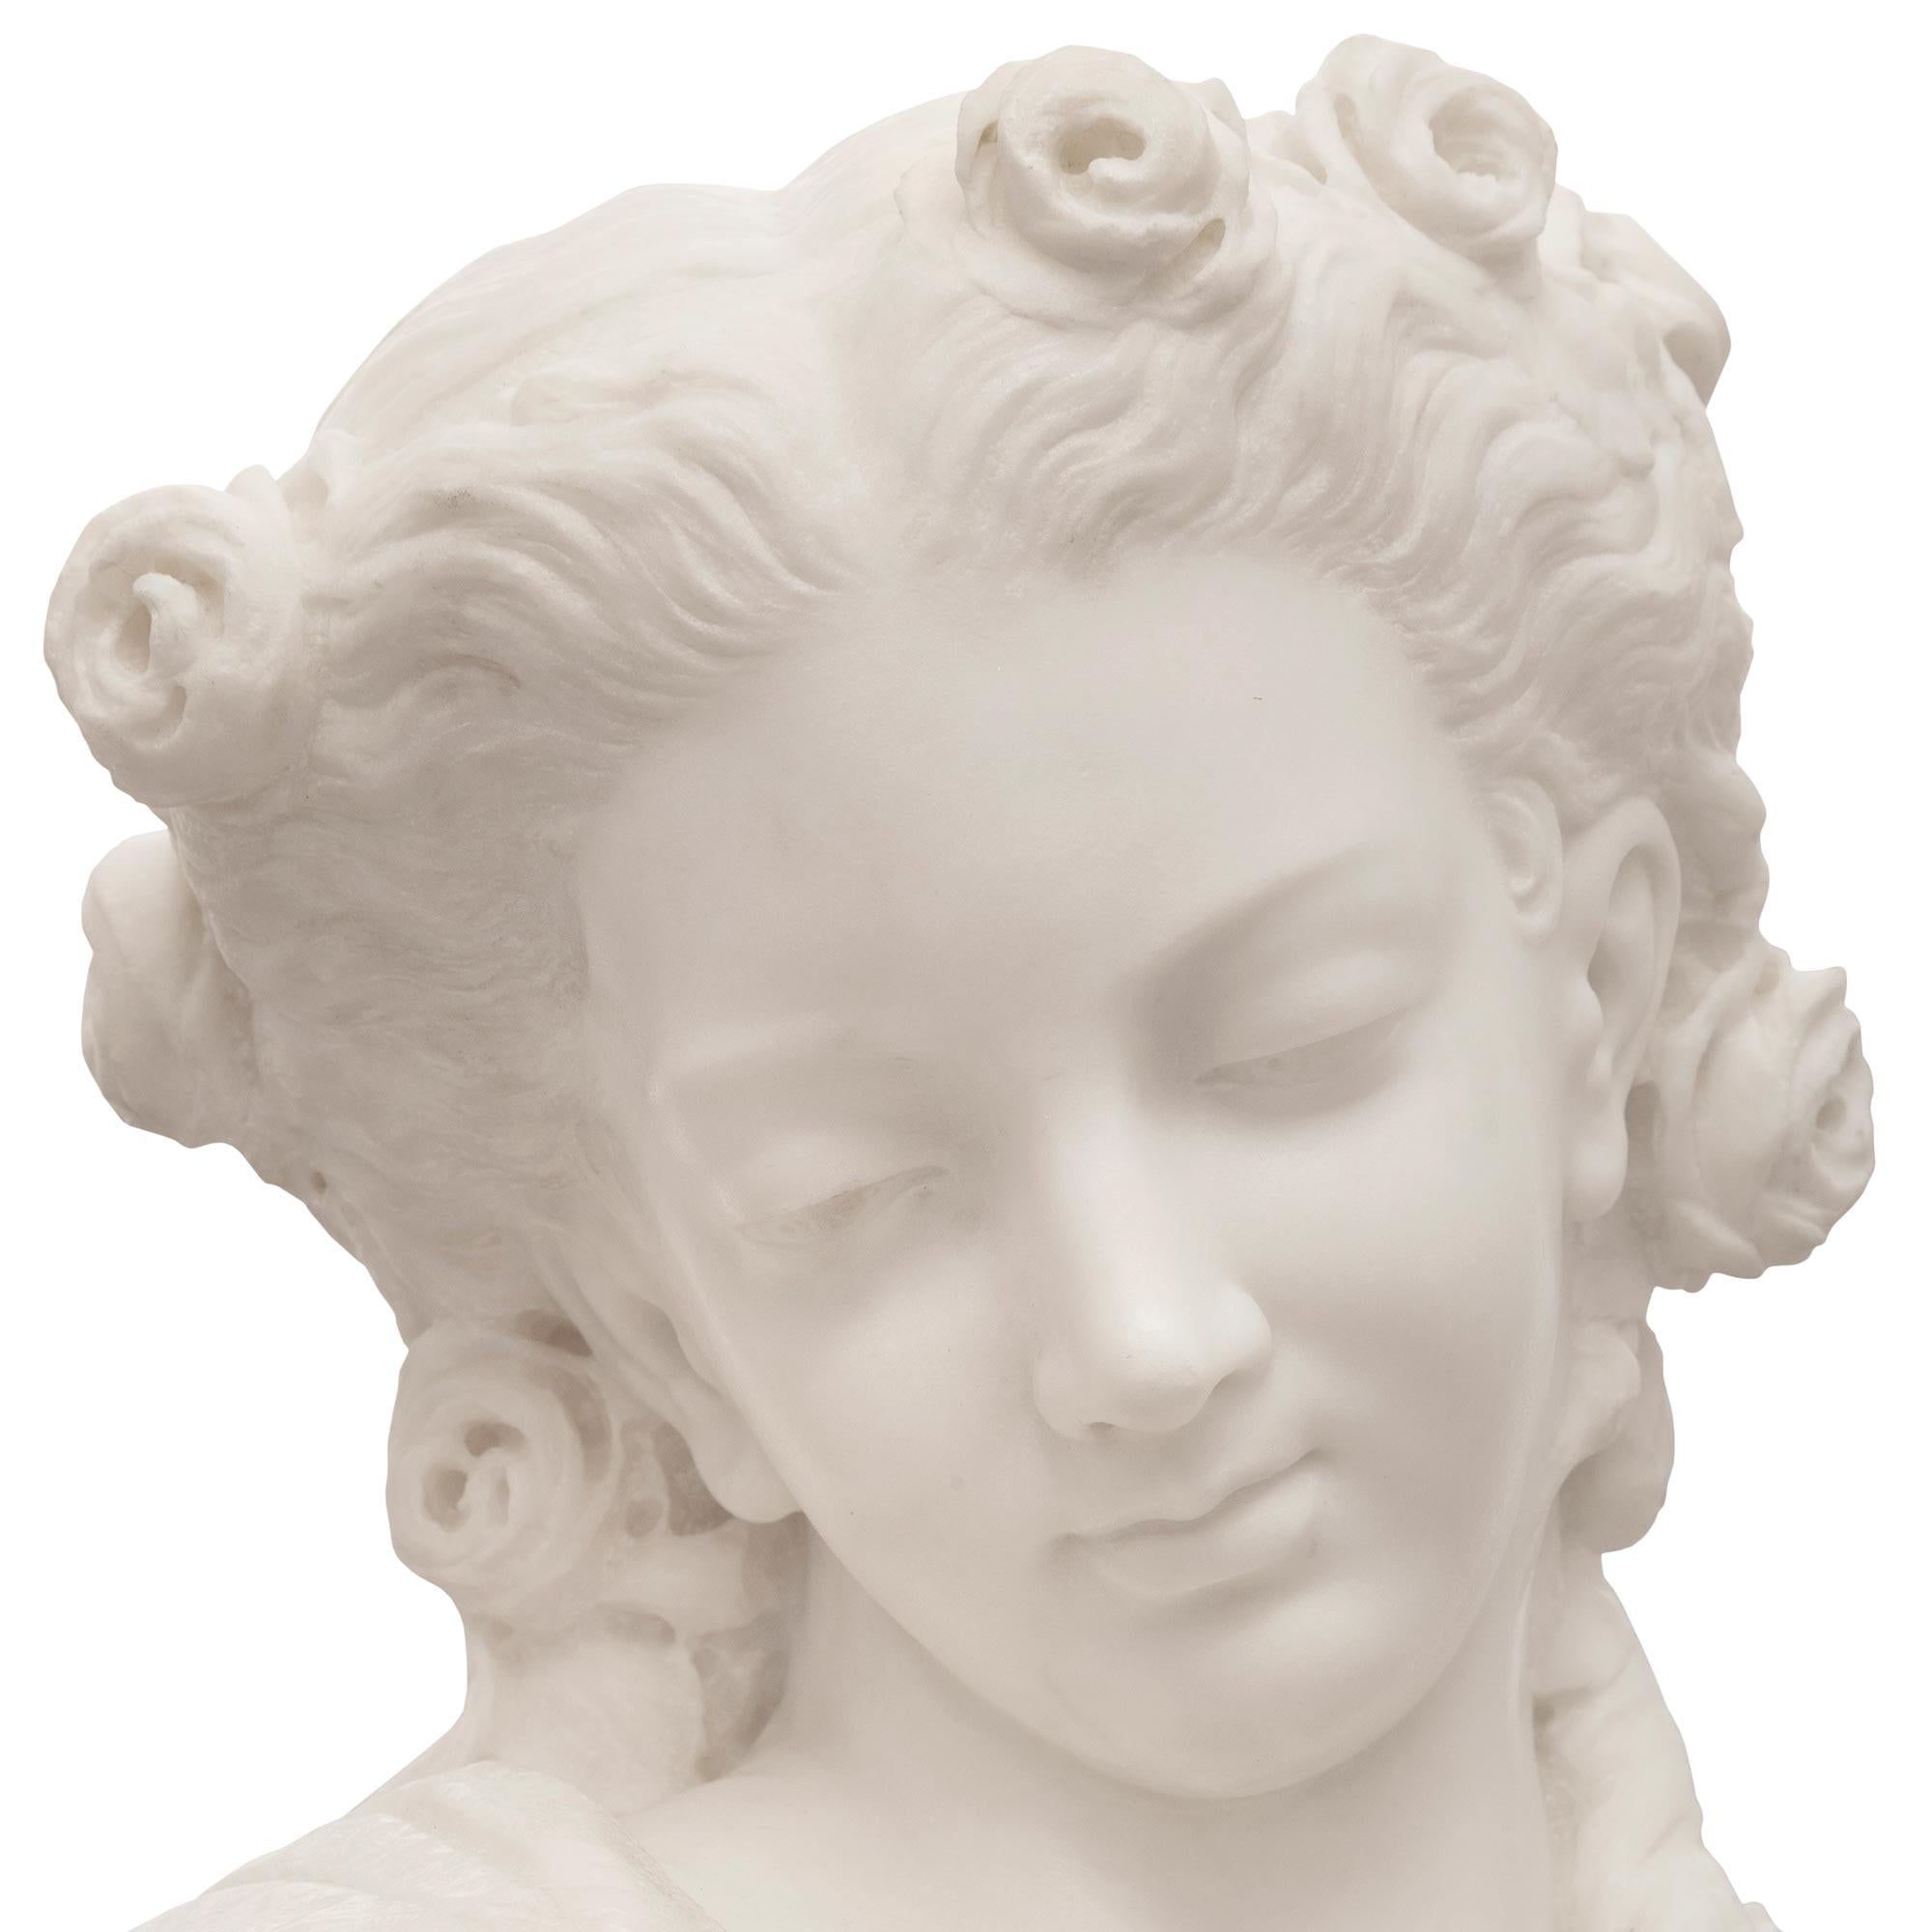 Carrara Marble A Italian 19th century white Carrara marble bust signed Mencuri Firenze For Sale